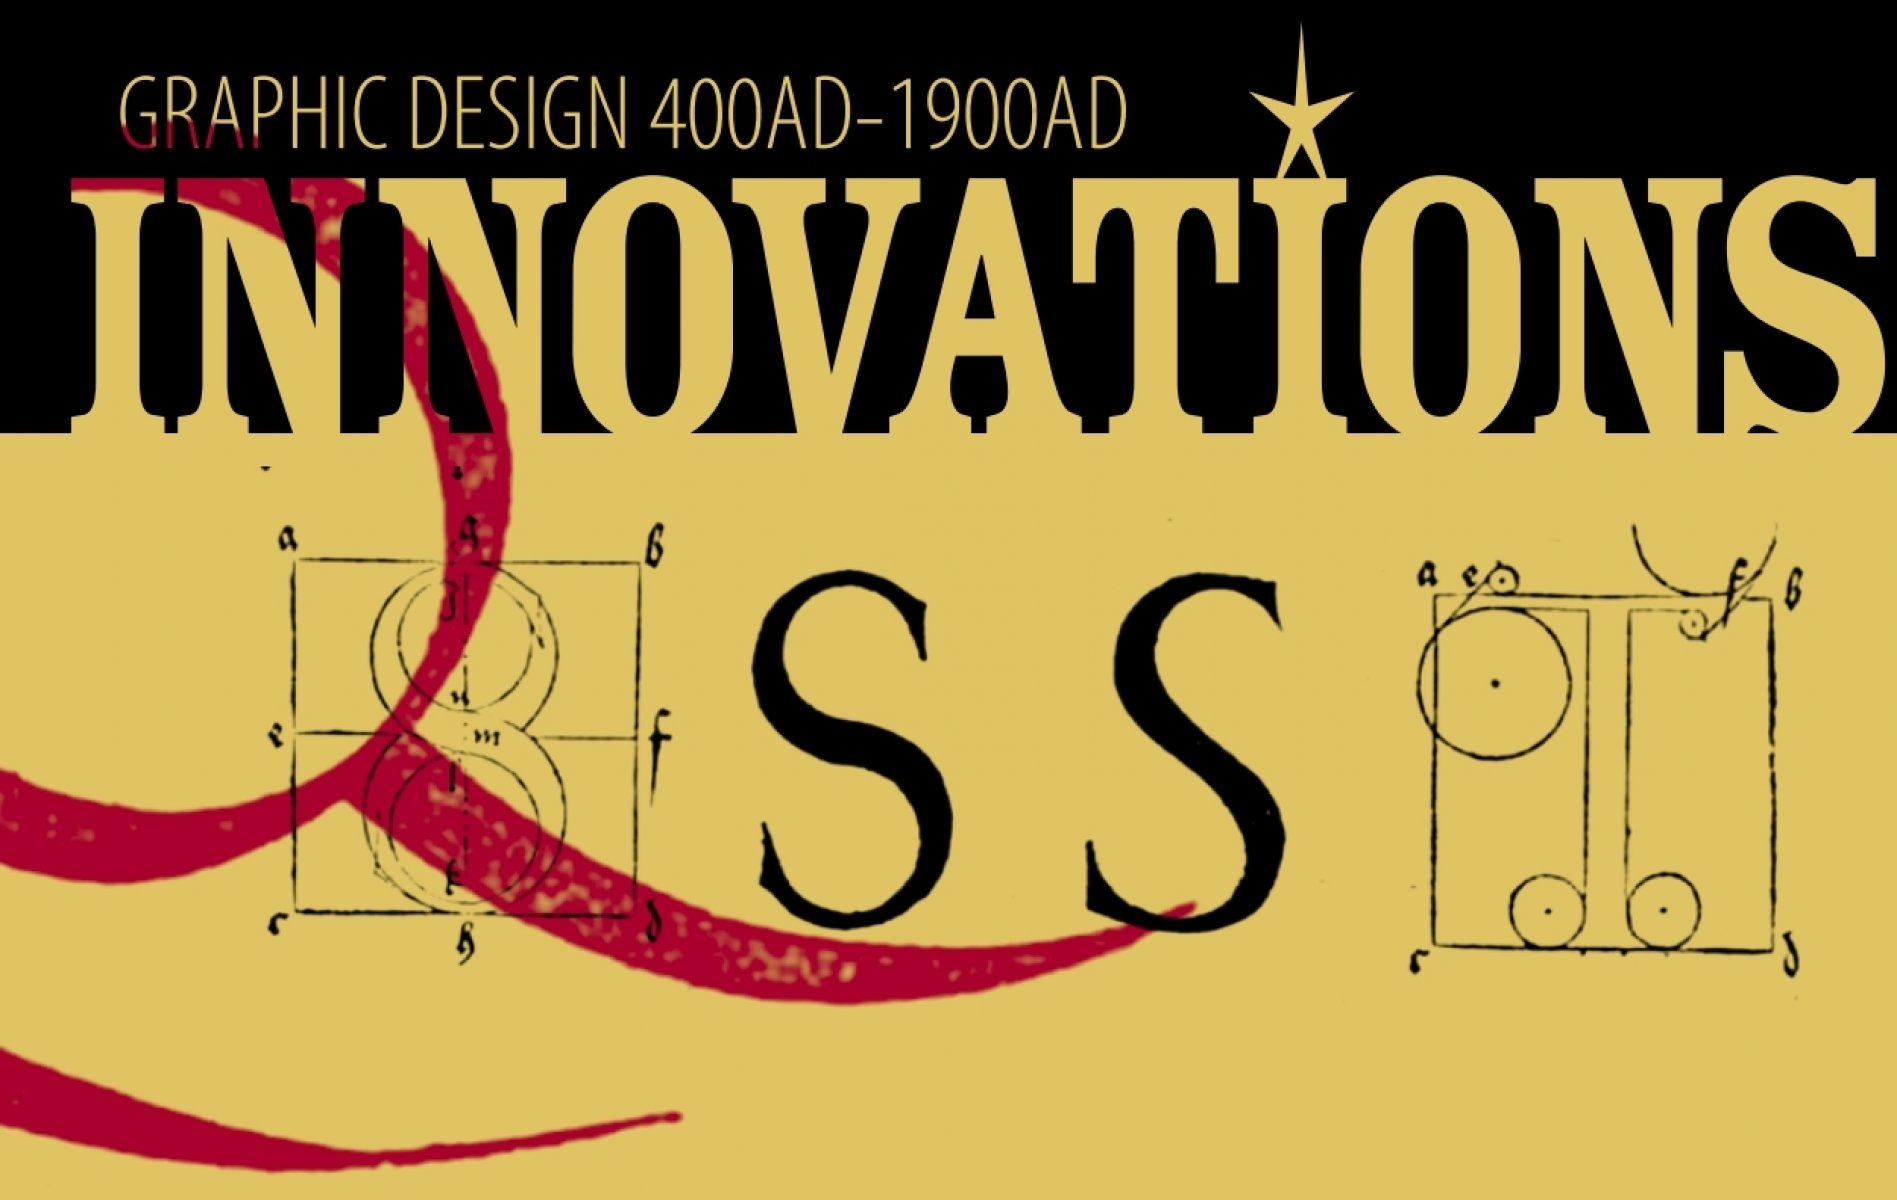 Innovations: Graphic Design 400AD-1900AD